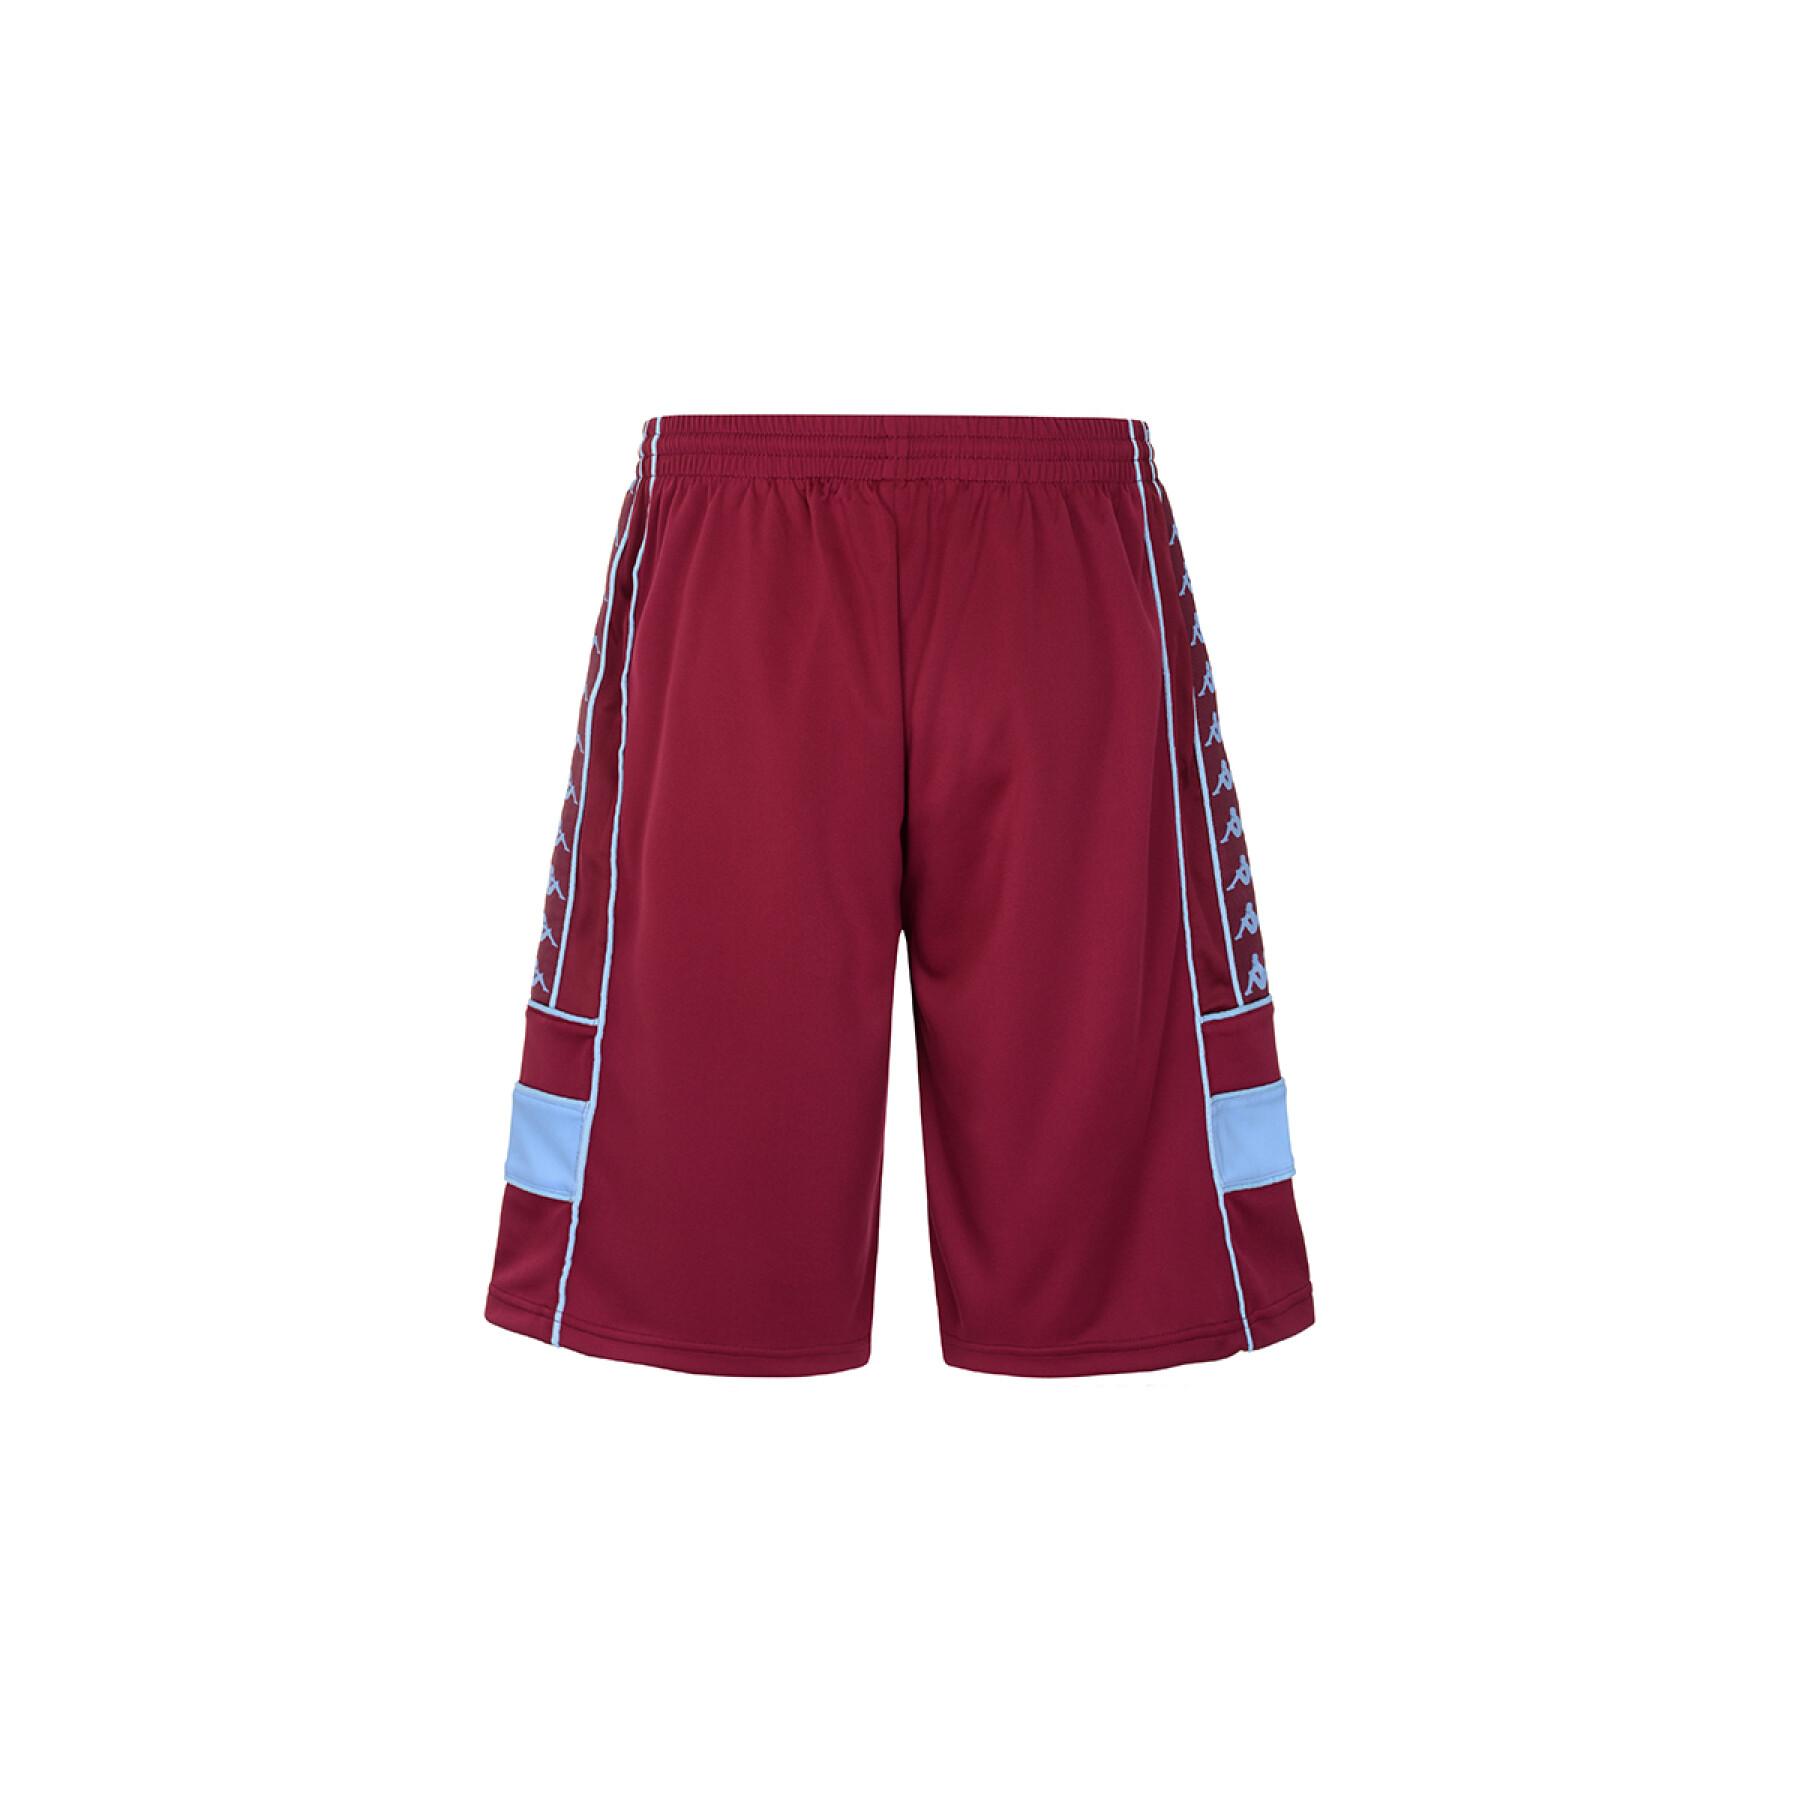 Pantaloncini Aston Villa FC 2021/22 222 banda arawa